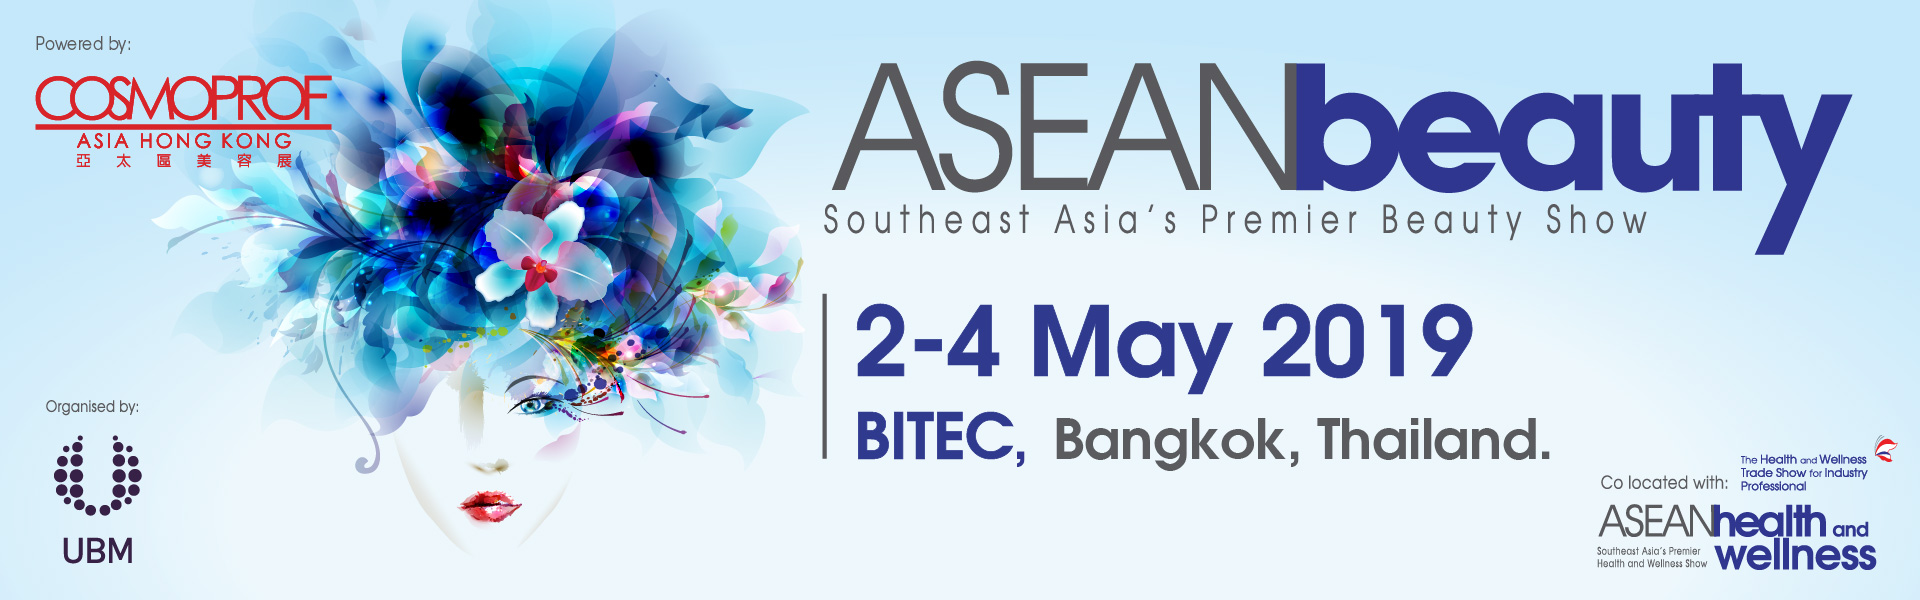 ASEANbeauty website sliding banner 01 EN